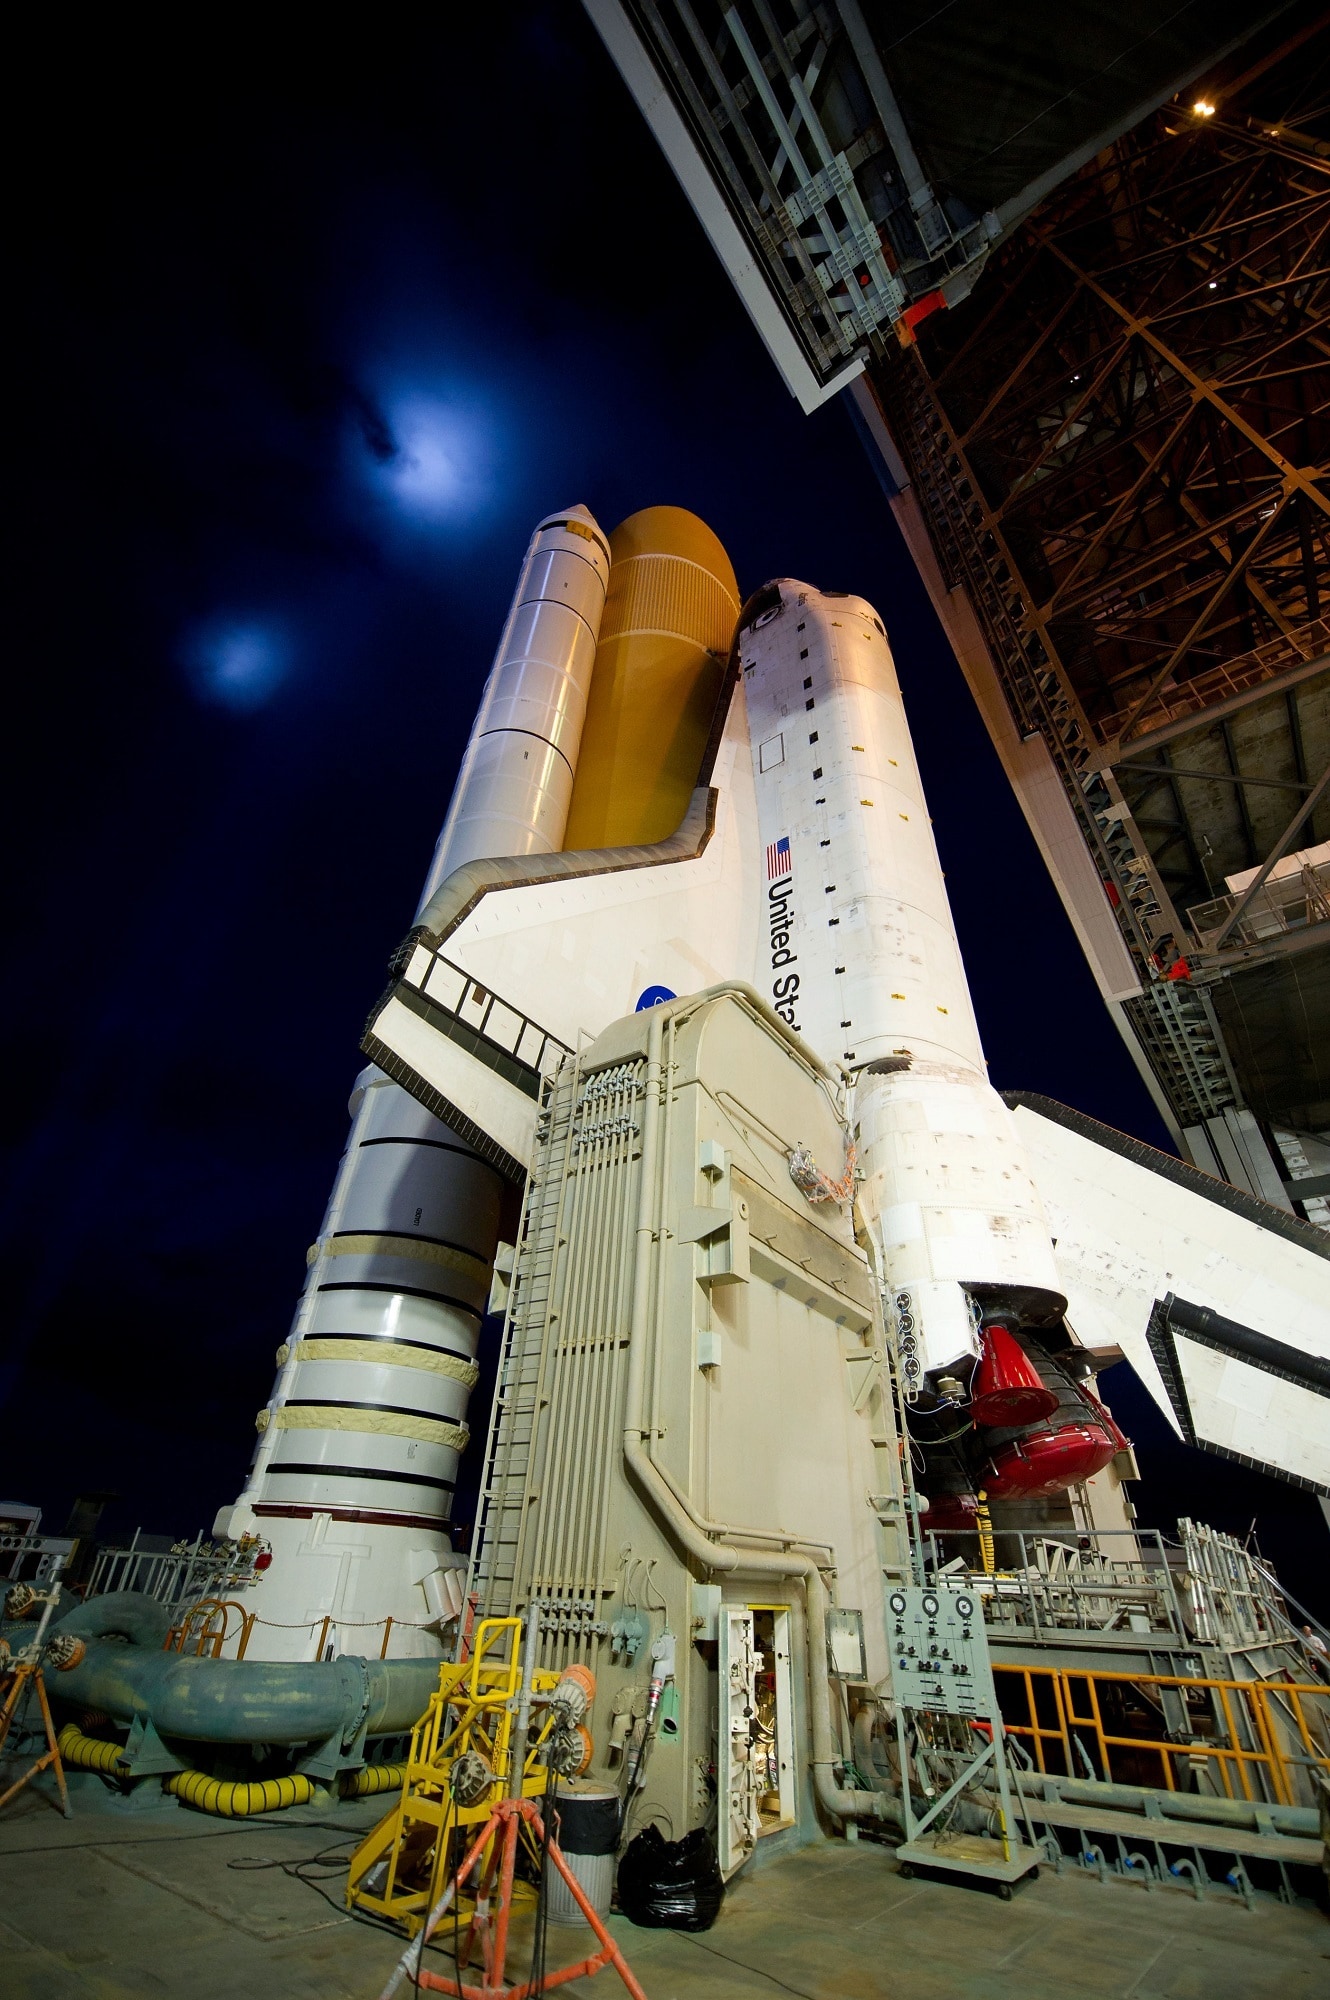 Rollout, Atlantis Space Shuttle, space exploration, space travel vehicle